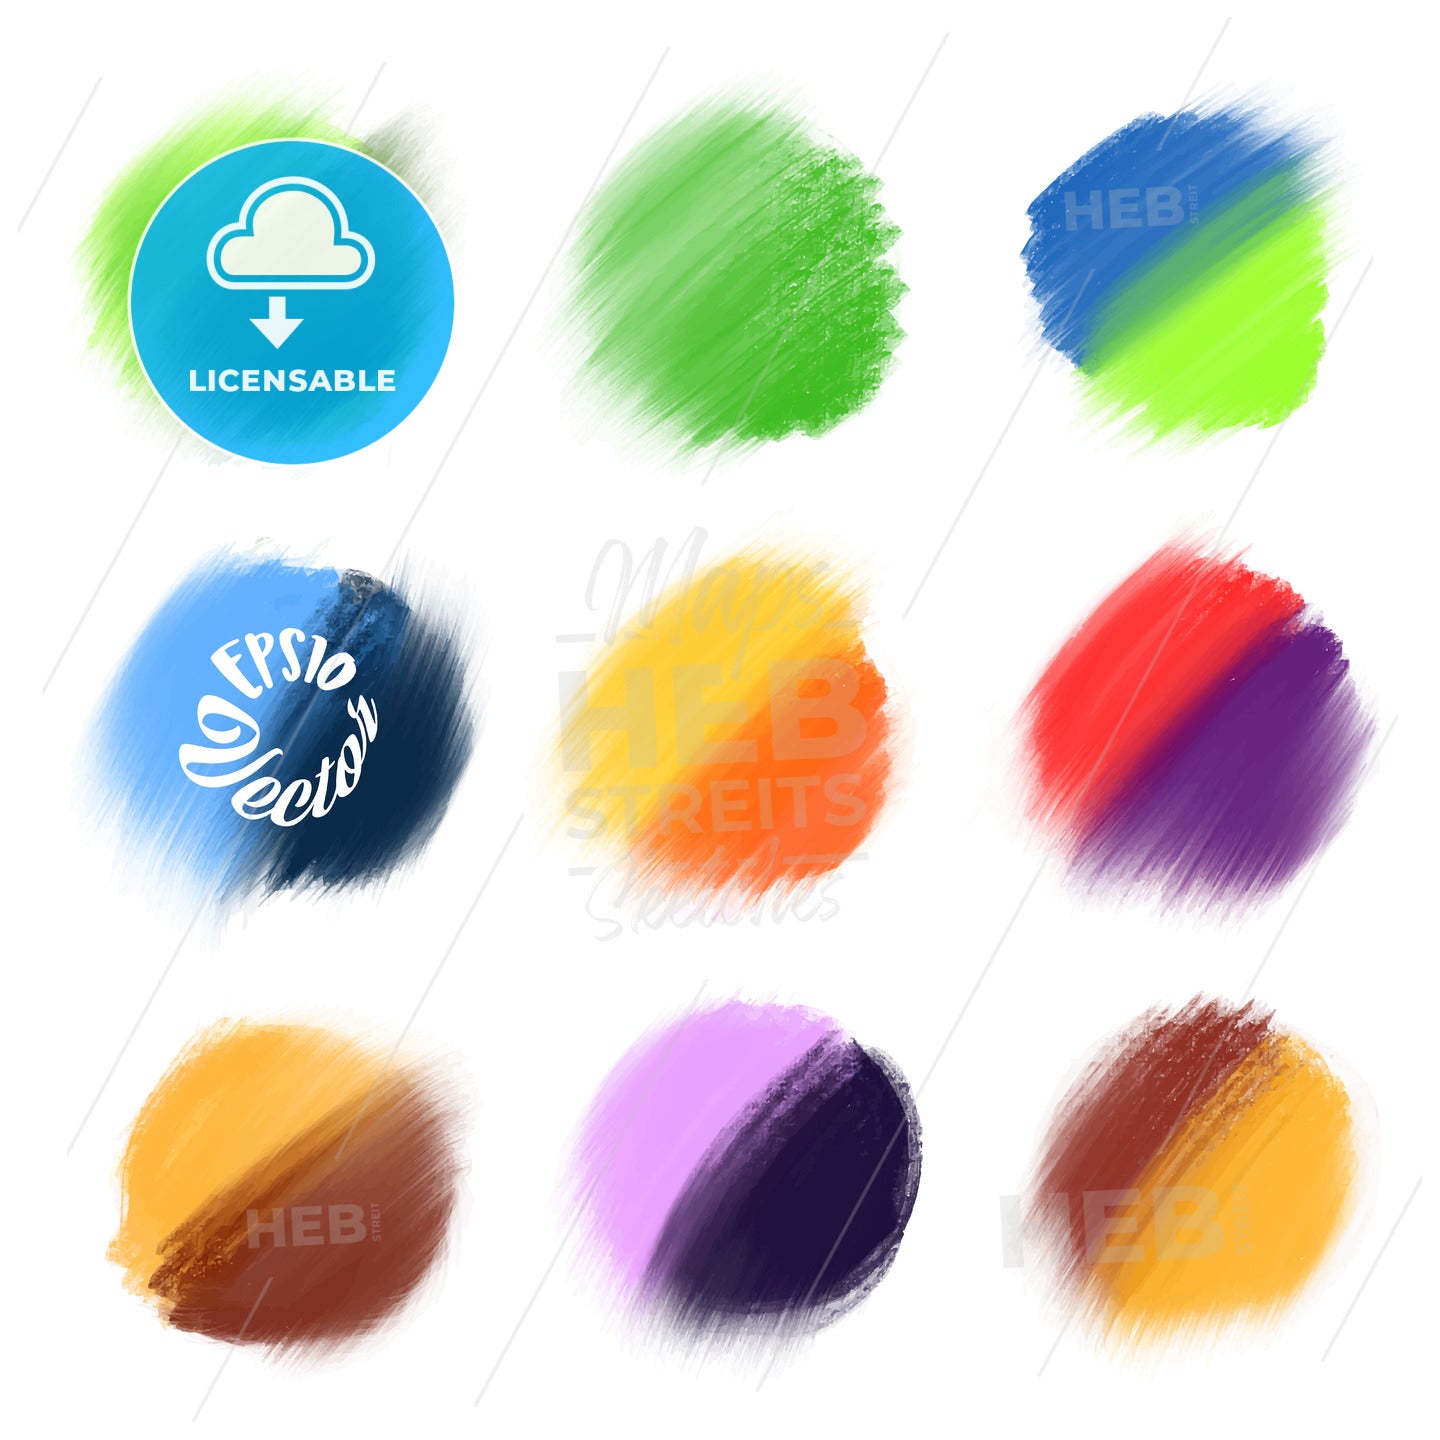 9 Colored Vector paint elements. – instant download